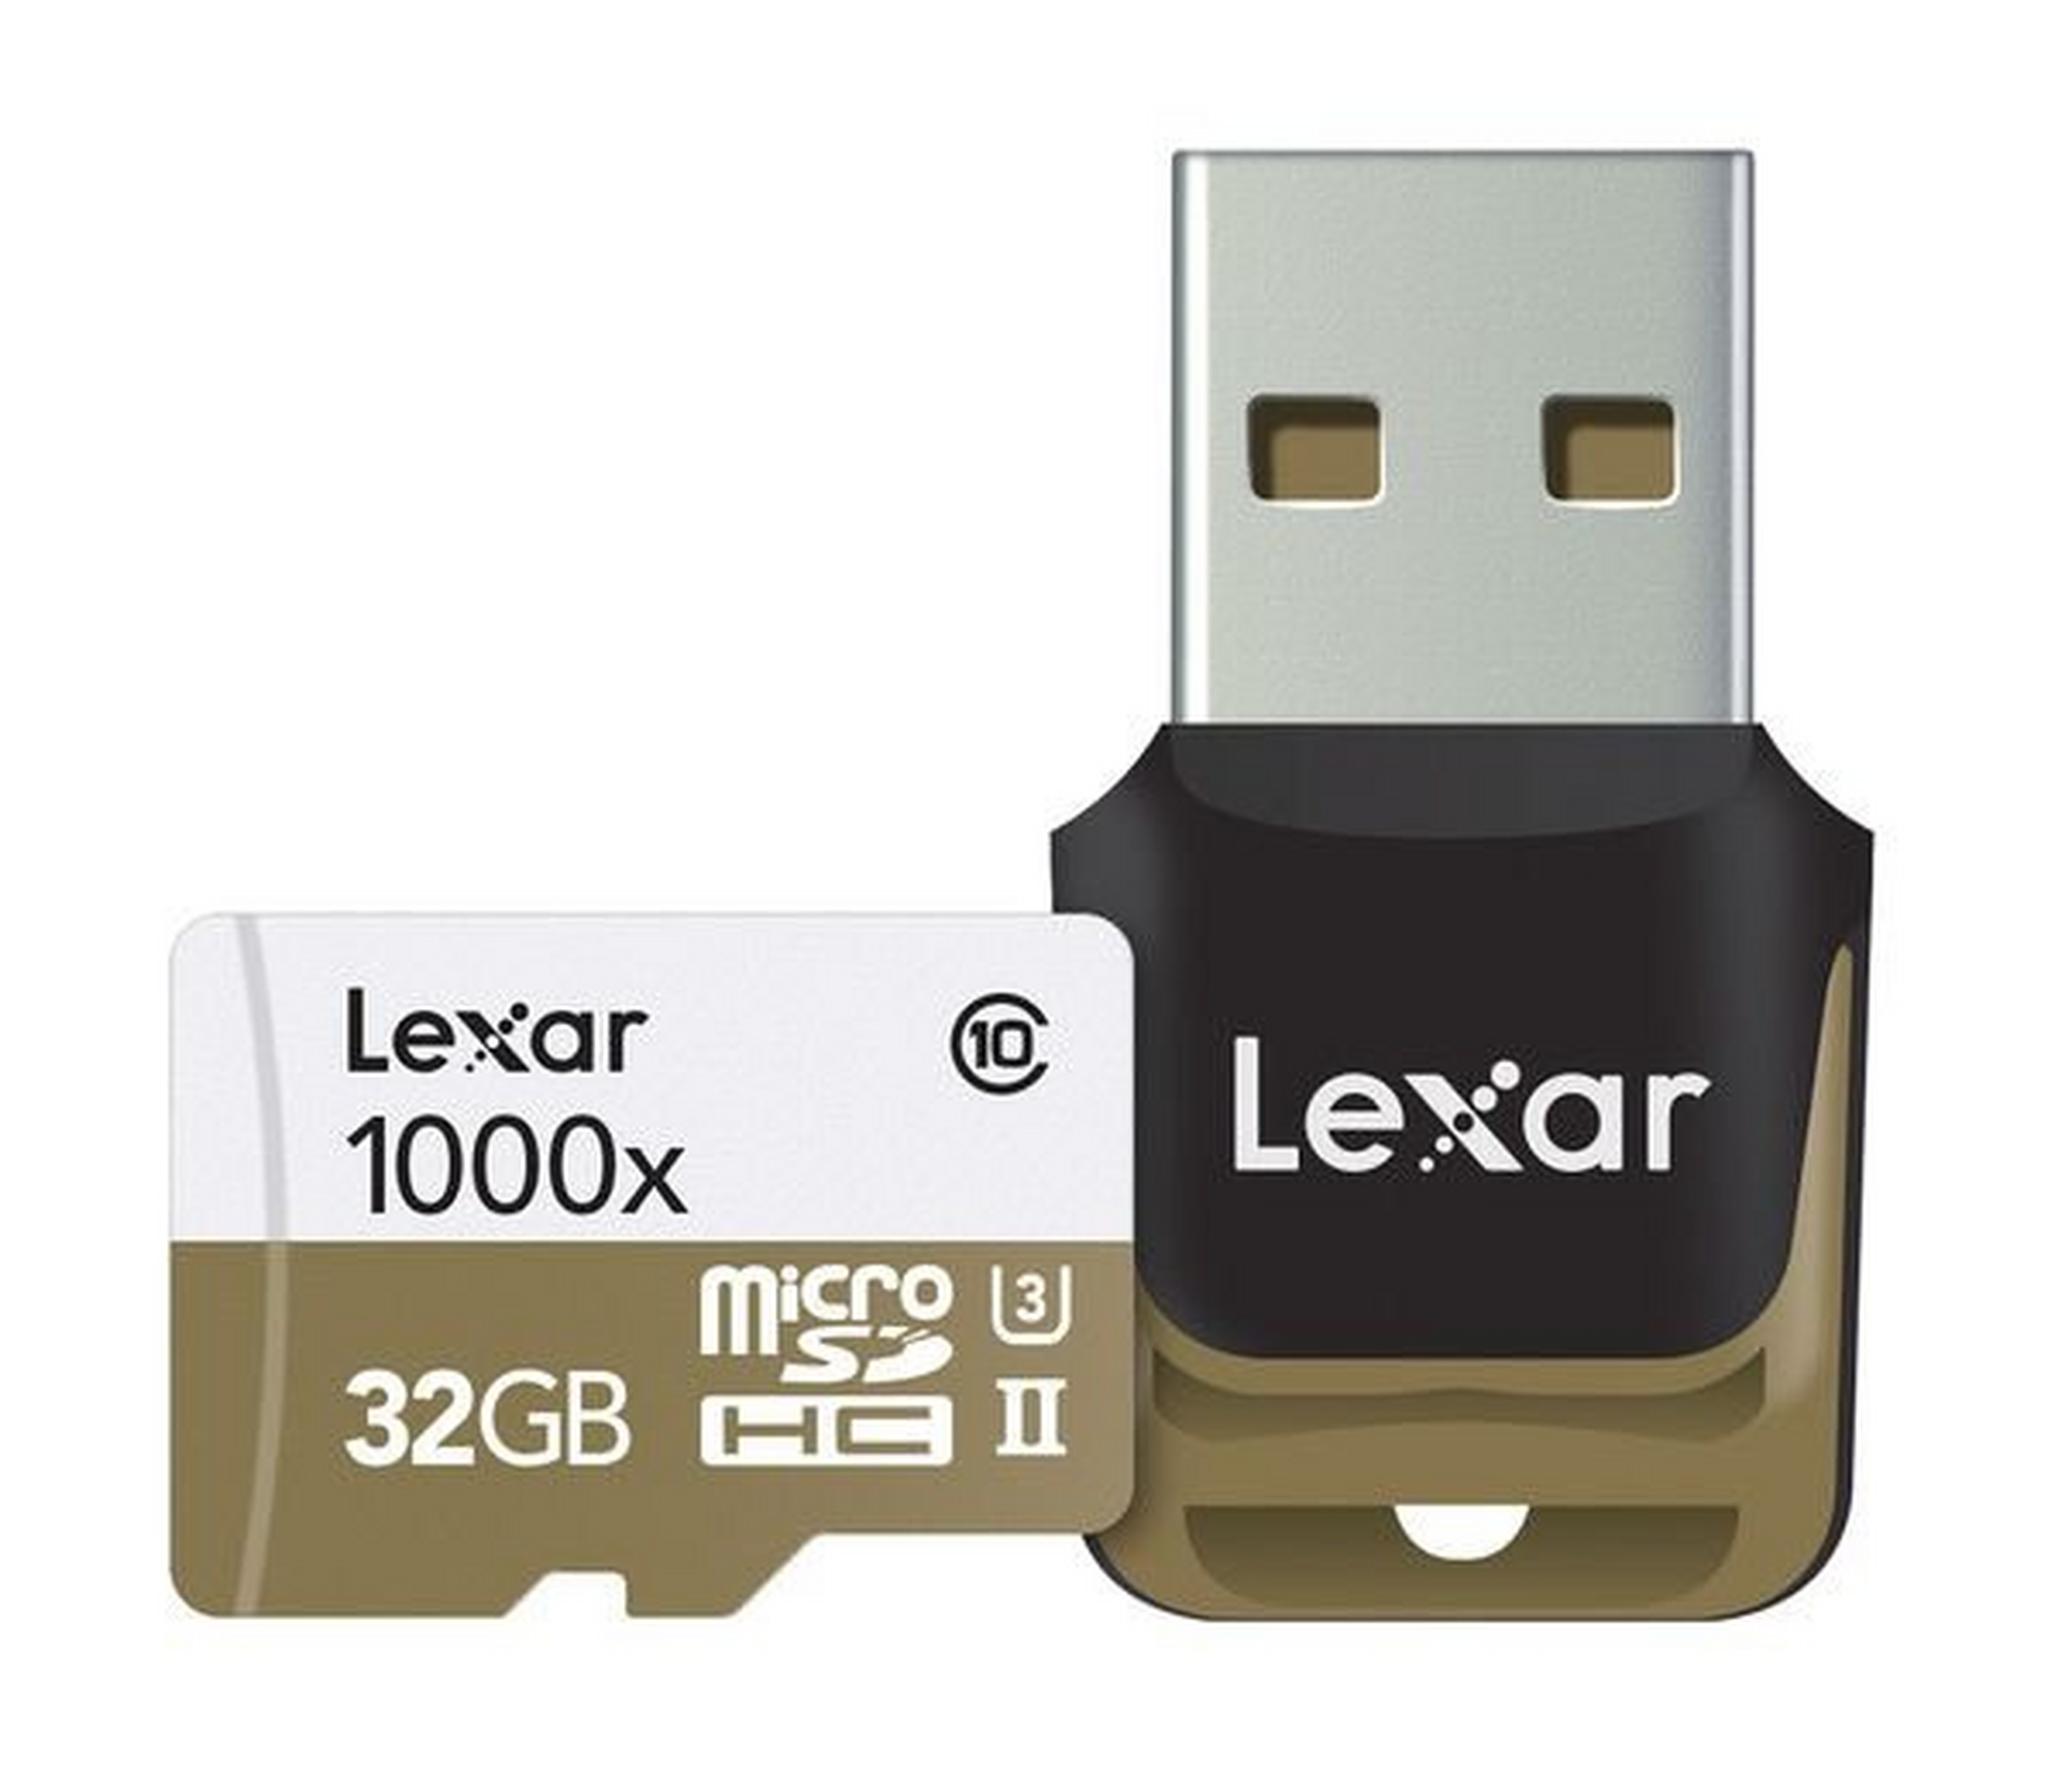 Lexar 32GB UHS-II 1000x MicroSDHC Class 10 Memory Card